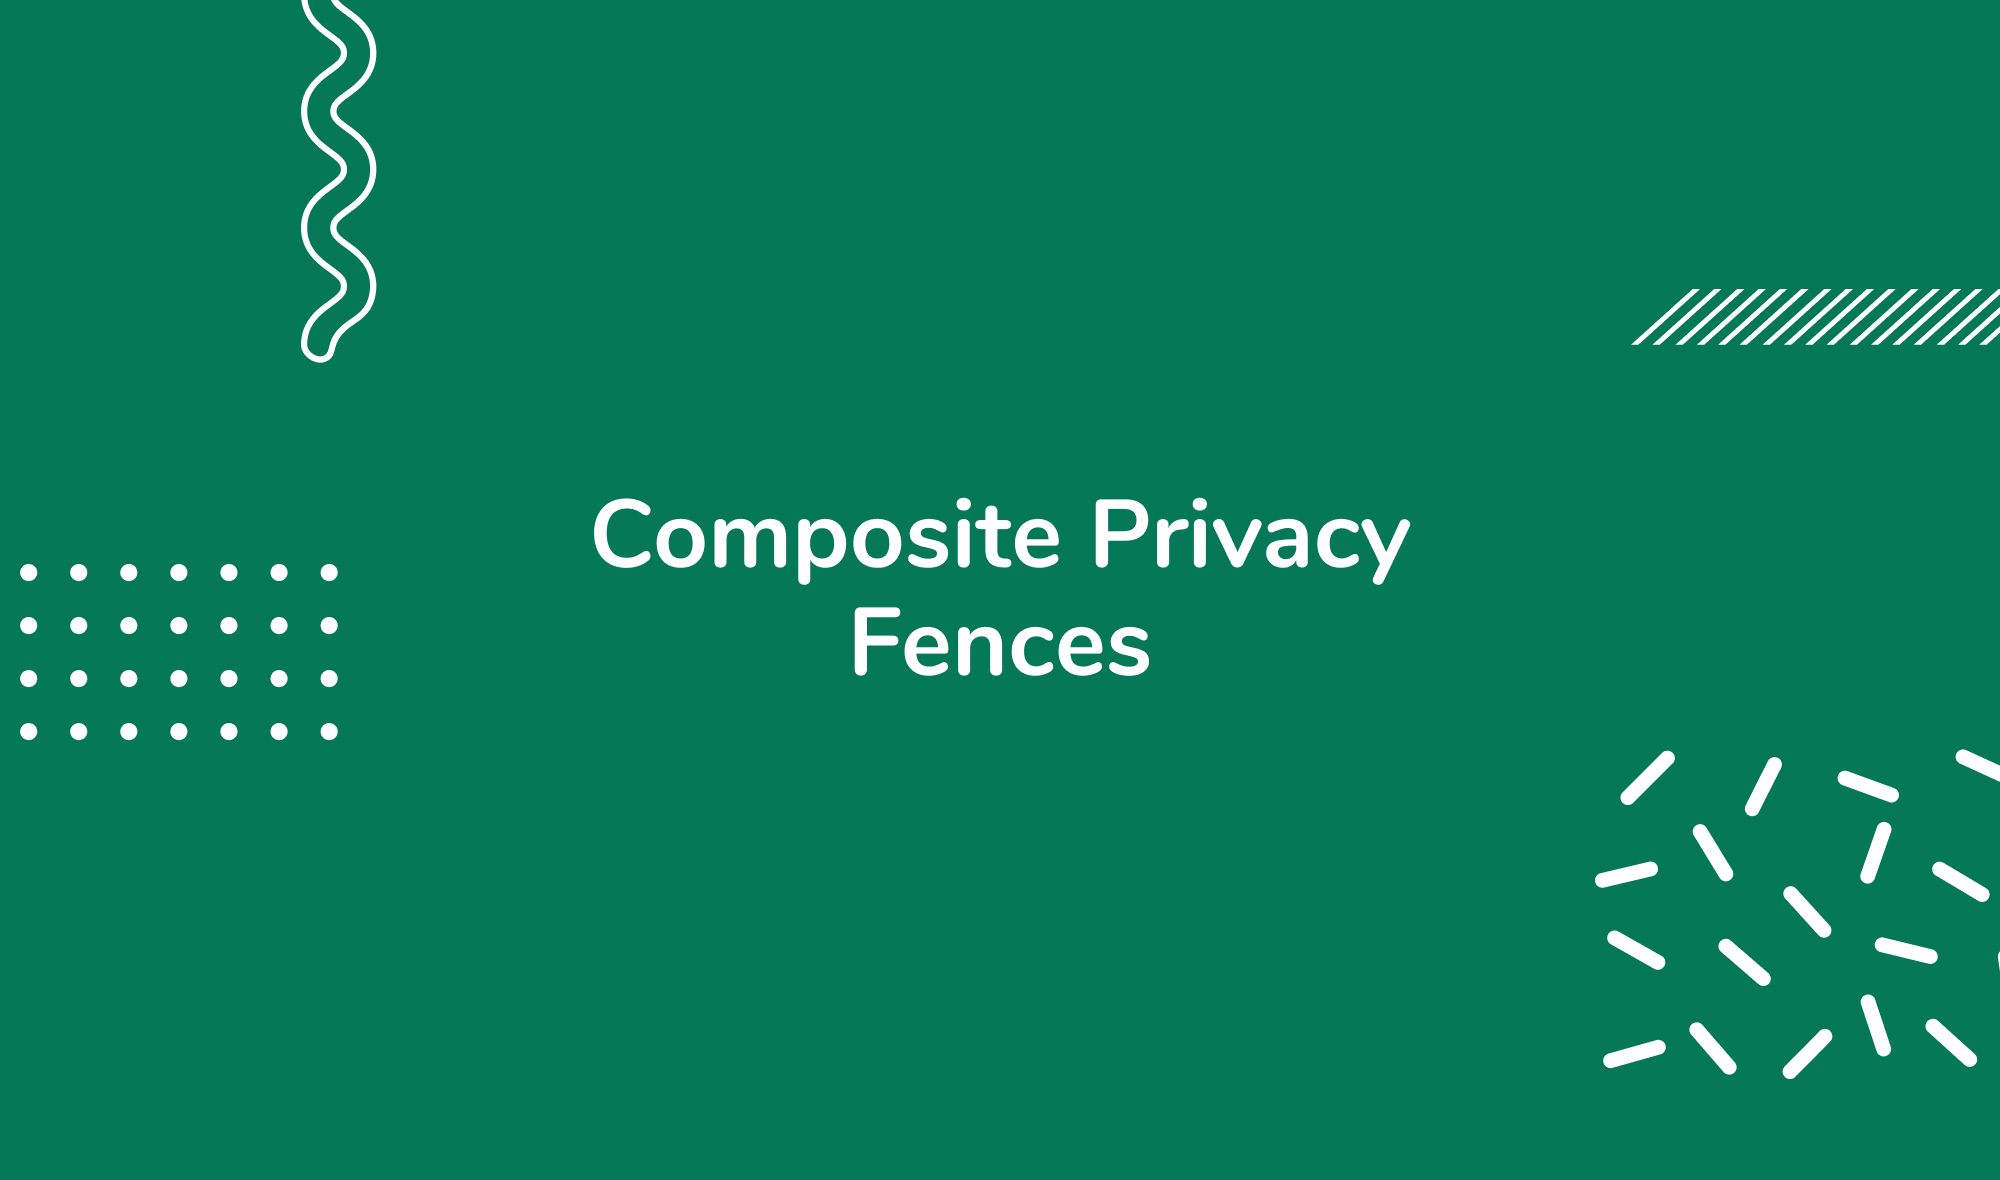 Composite Privacy Fences